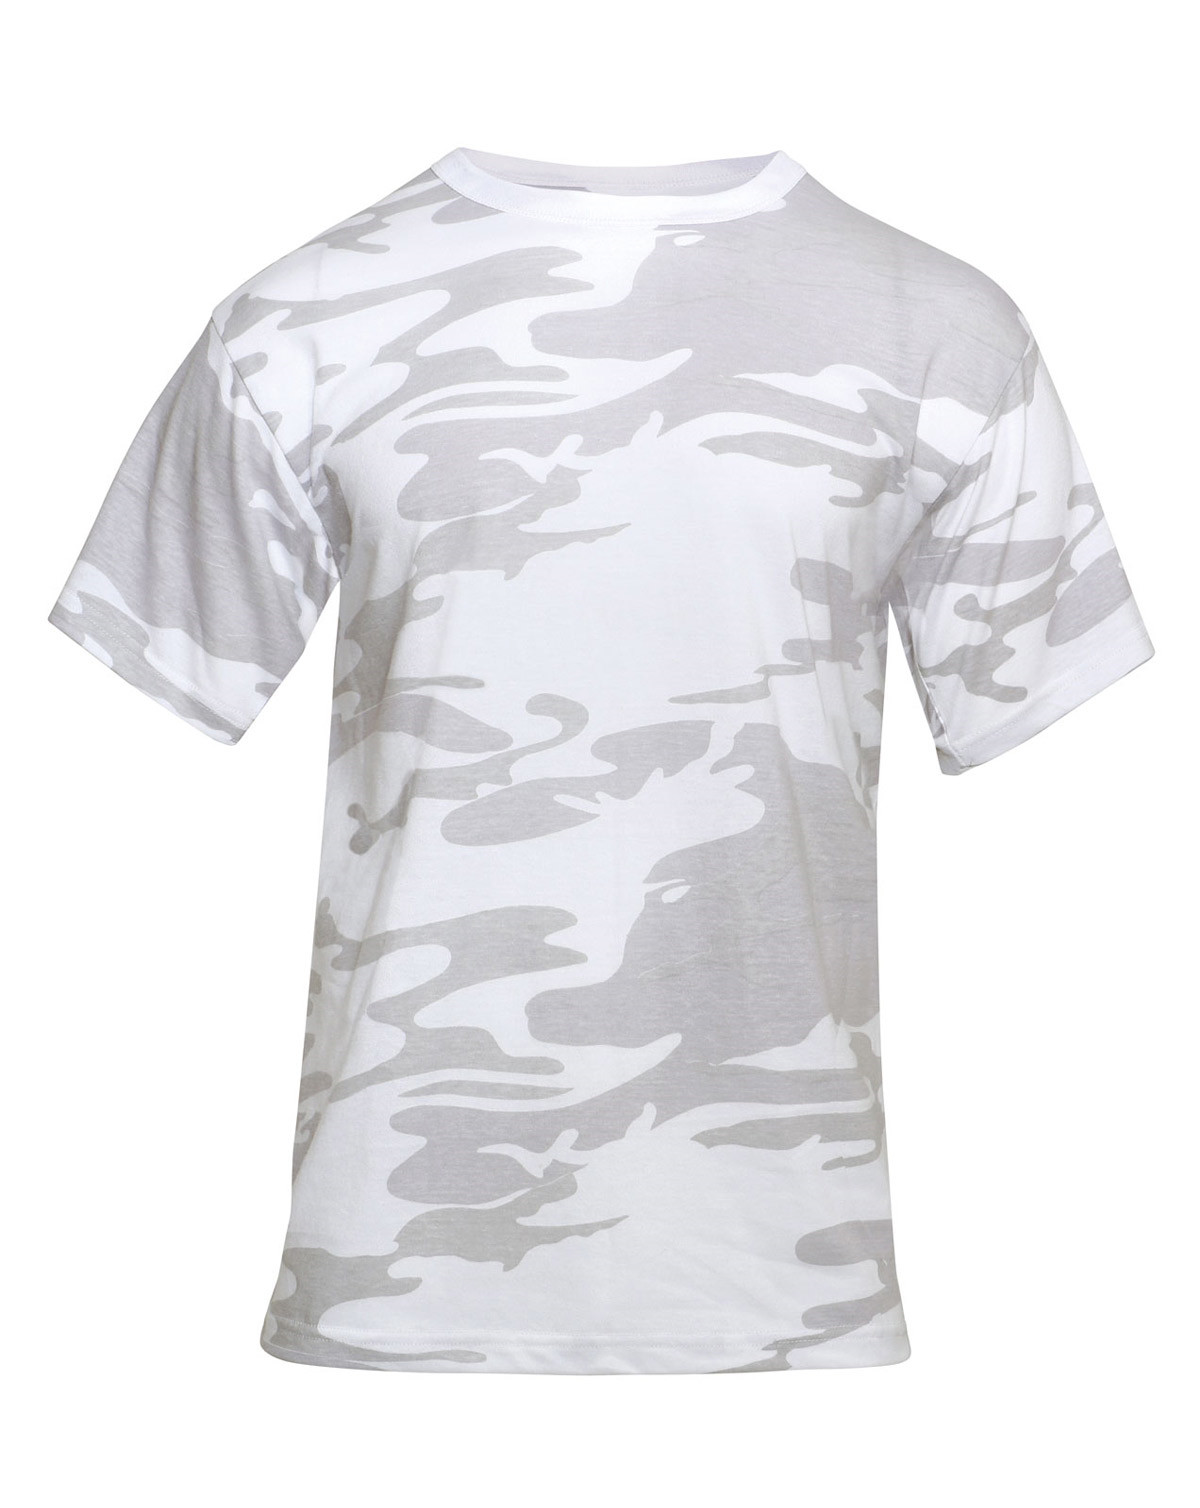 Rothco T-shirt - Mange Camouflager (Grå / Hvid, L)